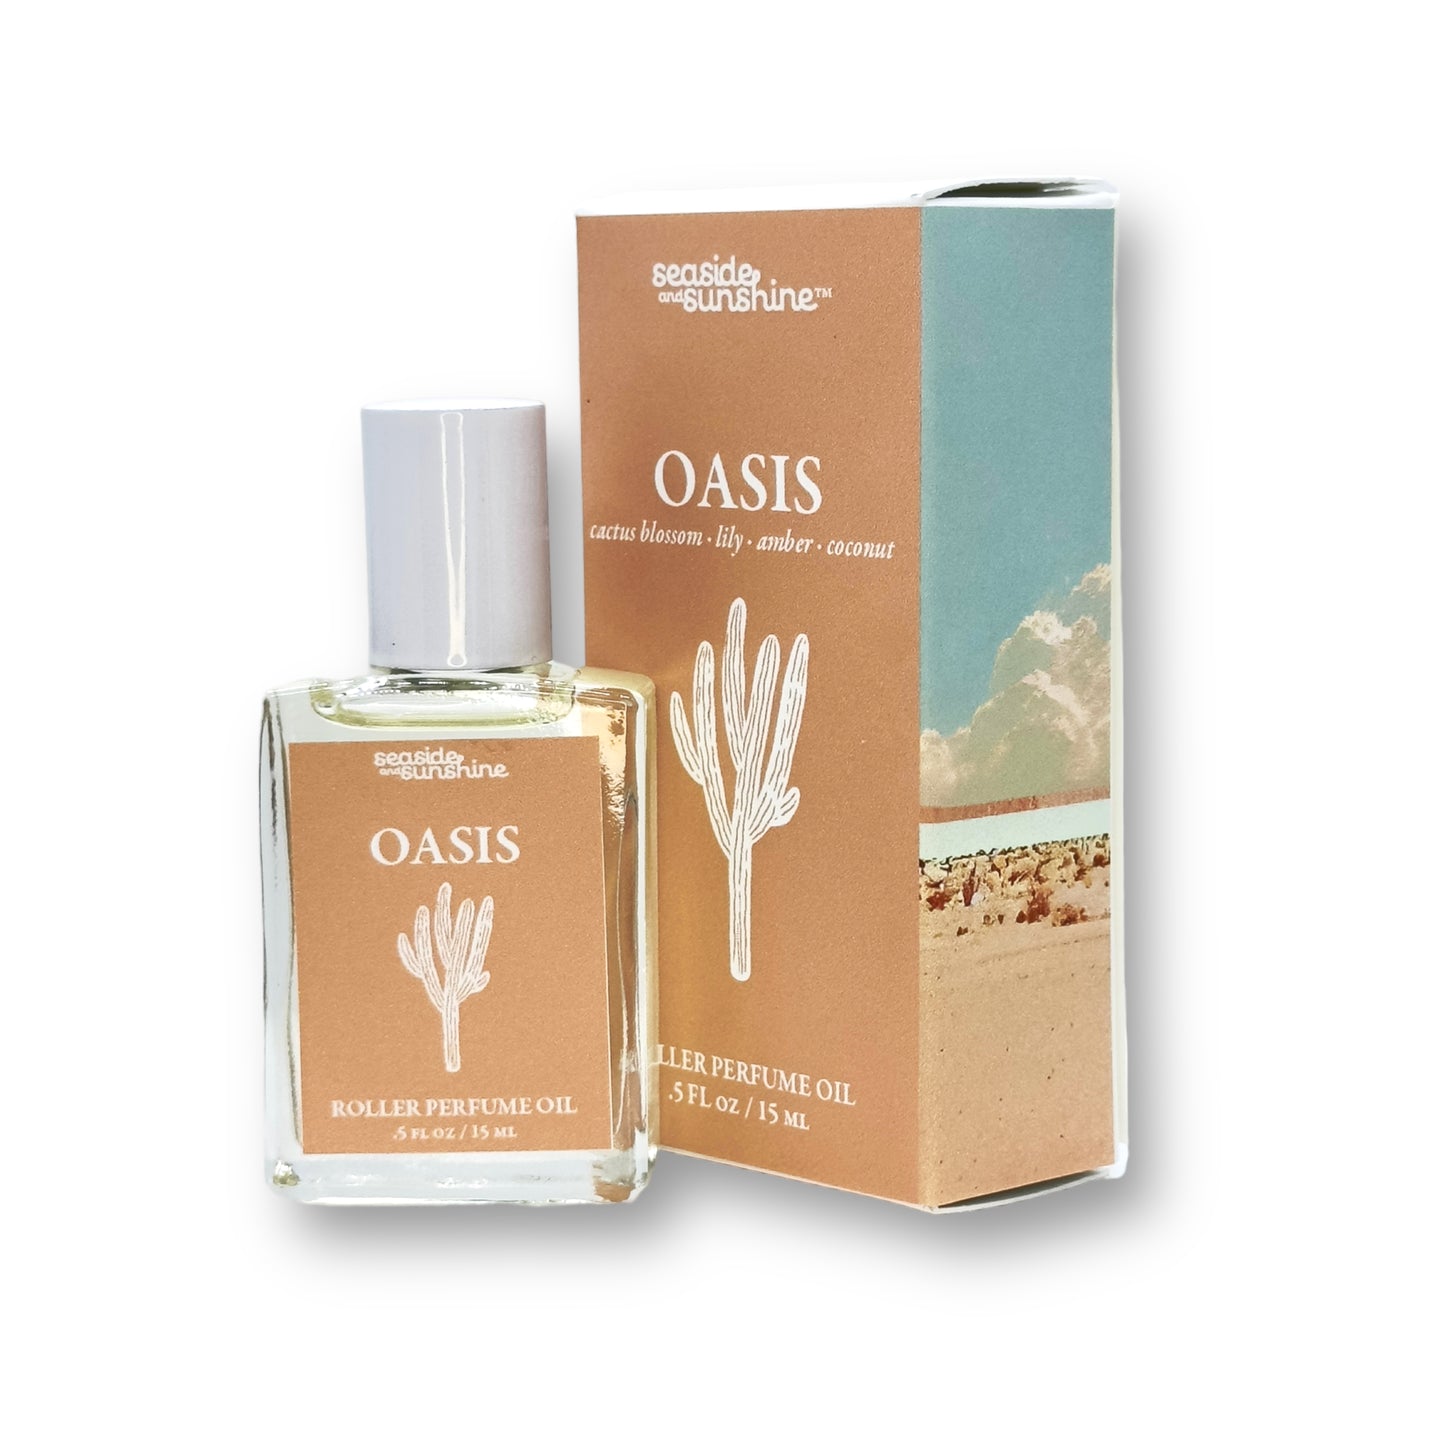 OASIS Roller Perfume